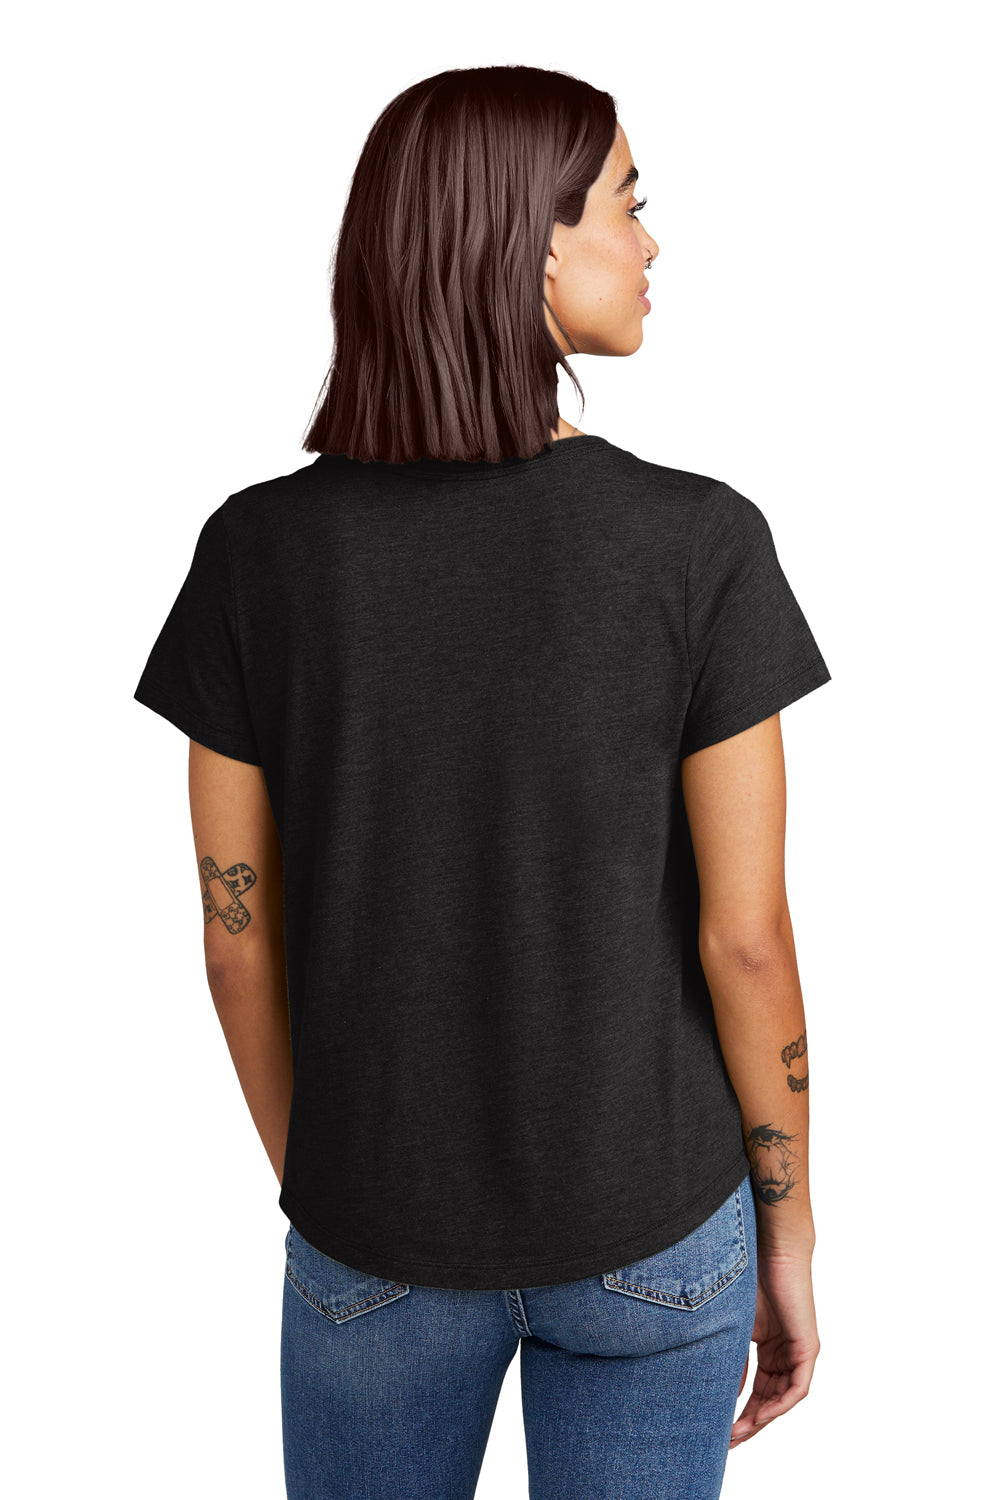 Allmade AL2015 Womens Short Sleeve Scoop Neck T Shirt Space Black Model Back